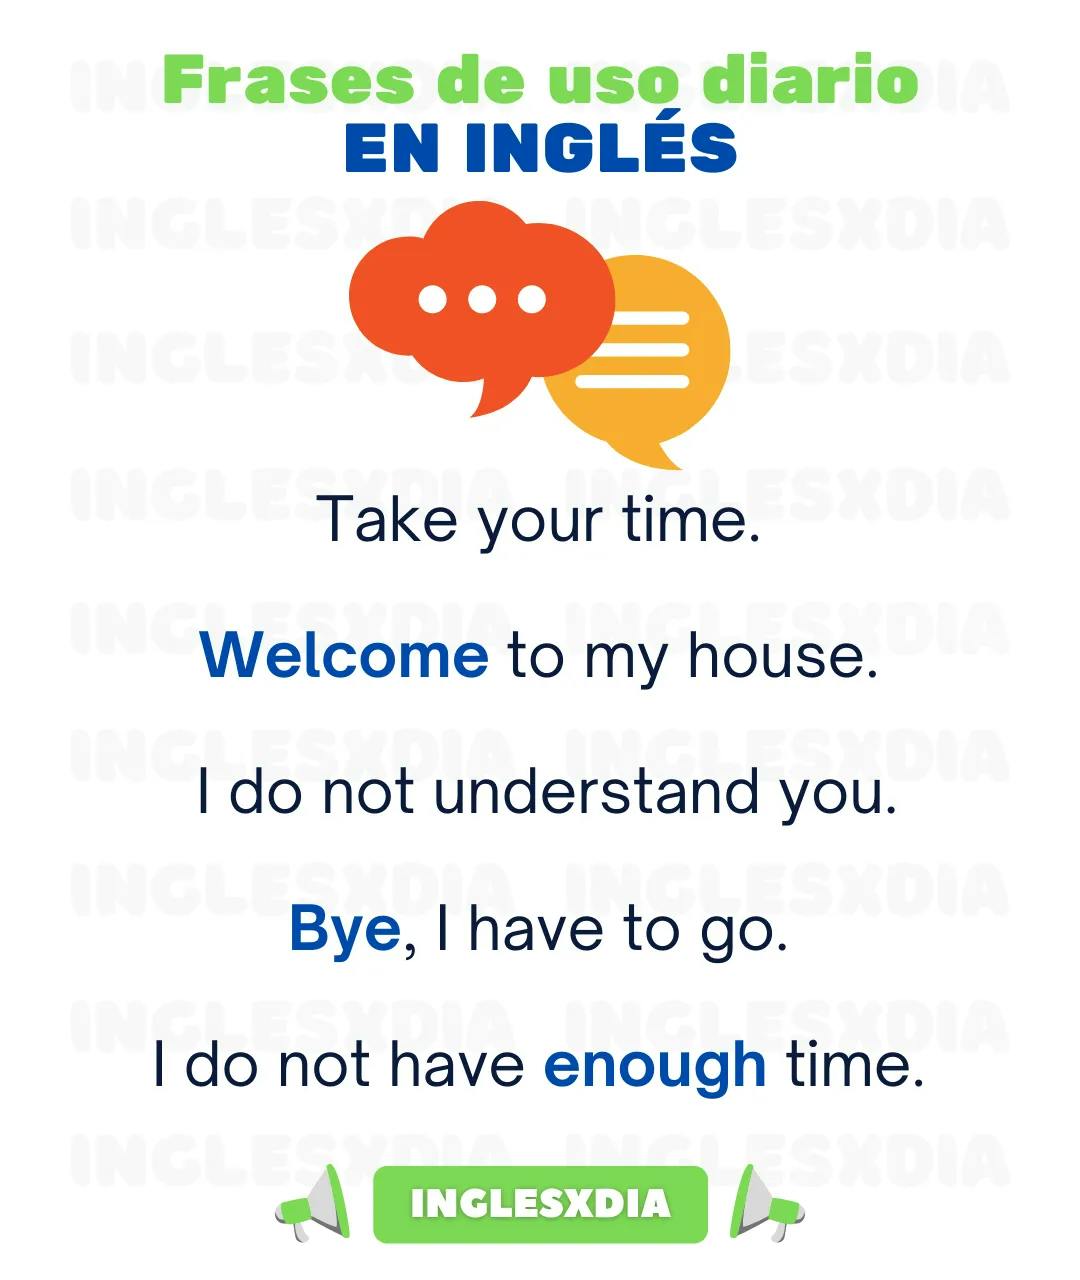 Curso de inglés en línea: frases en inglés de uso diario